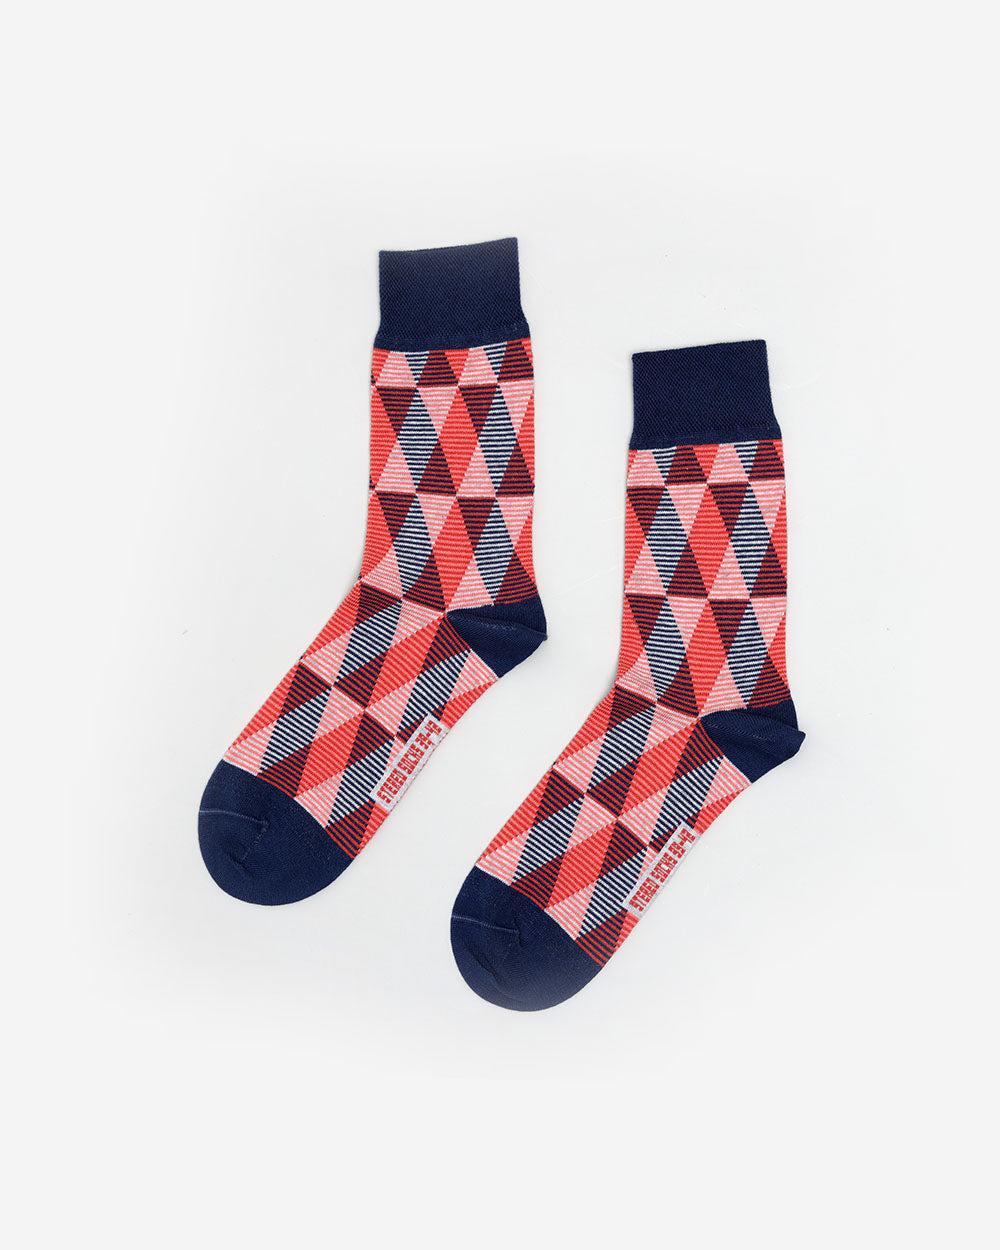 New Hampshire Socks